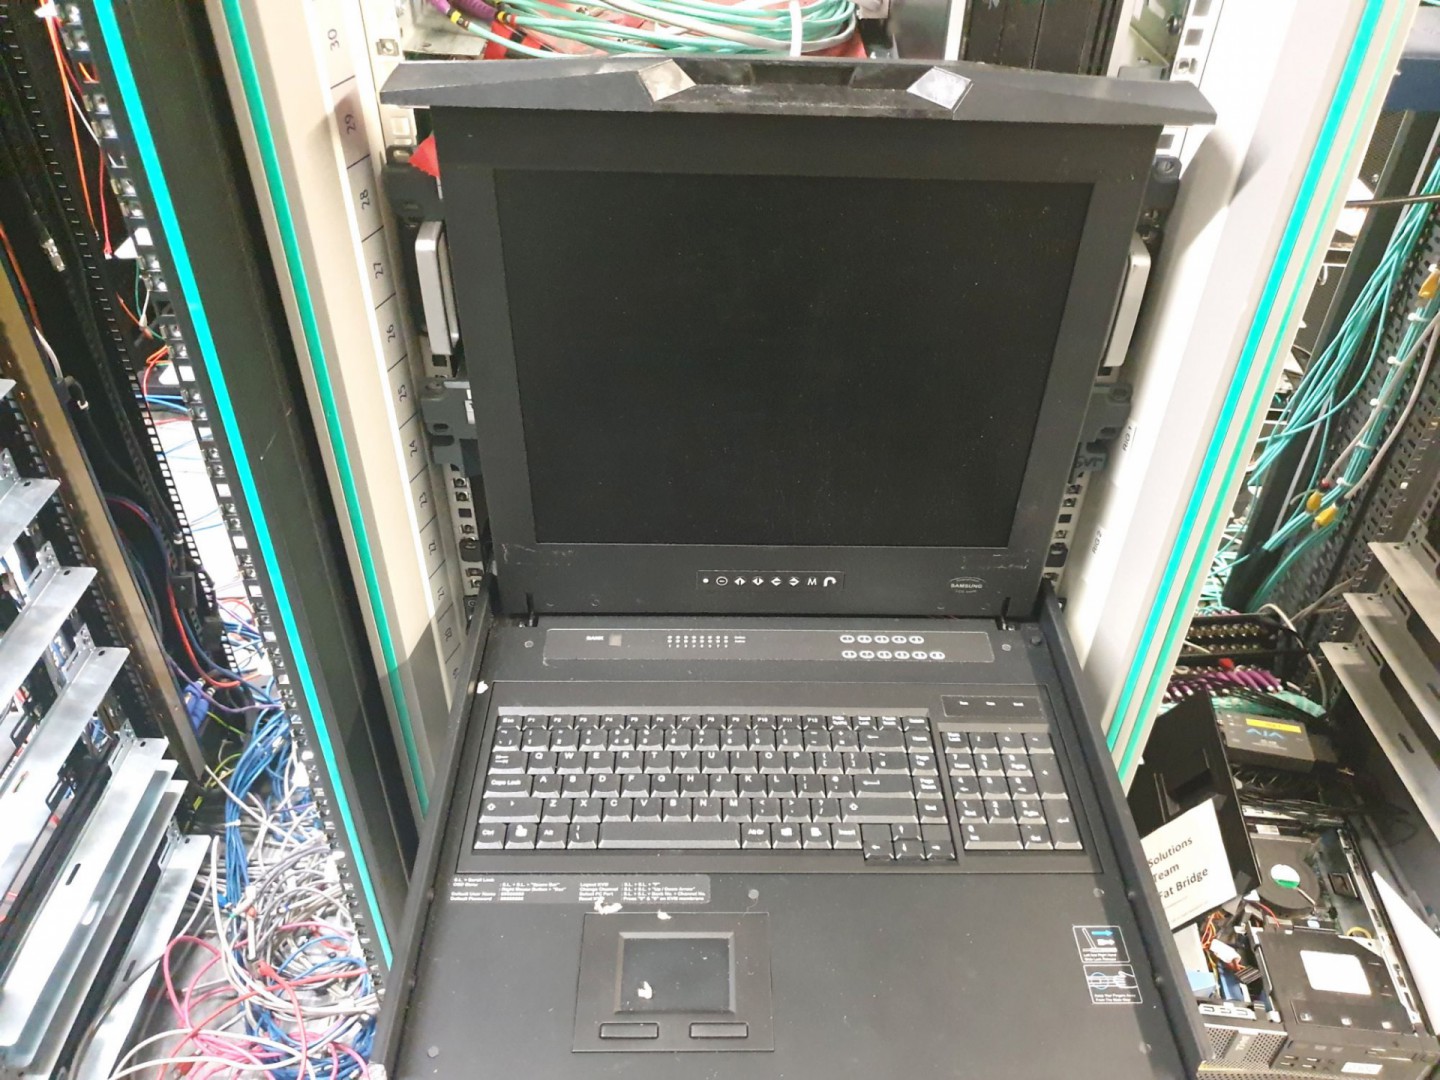 ICL RKP-117-802e rack mount monitor, keyboard